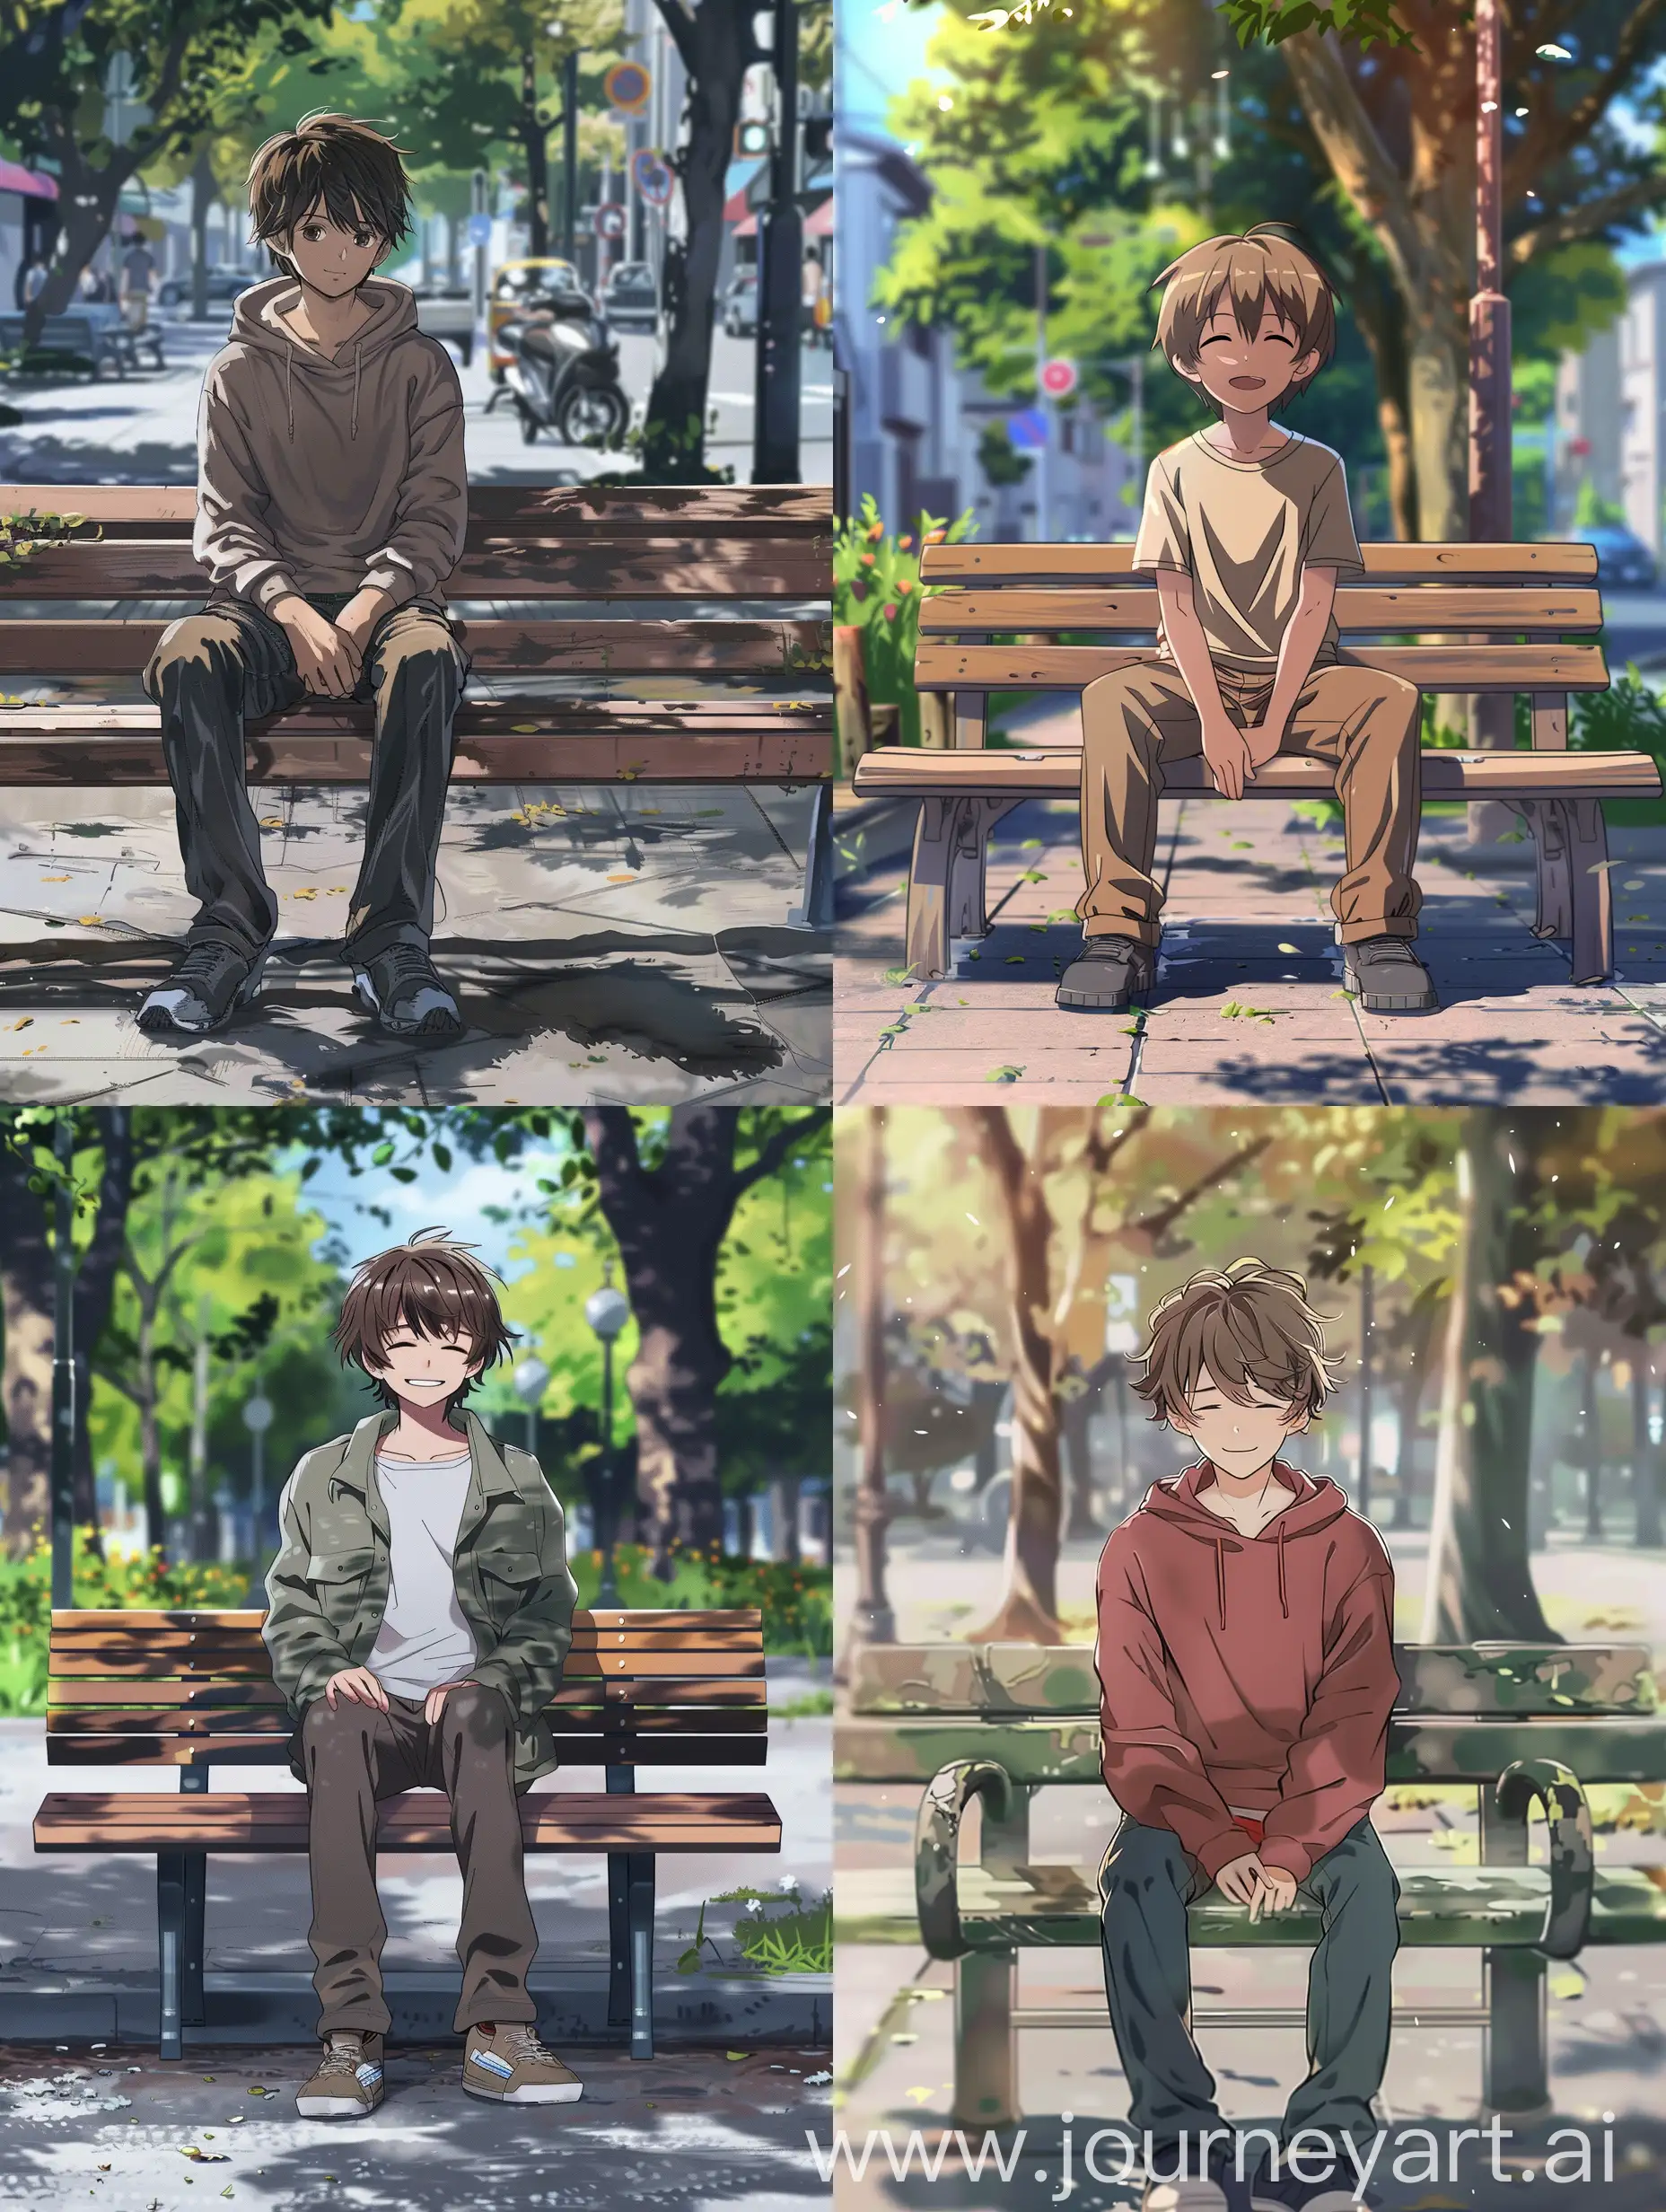 Youthful-Anime-Teen-Enjoying-Serene-Park-Bench-Moment